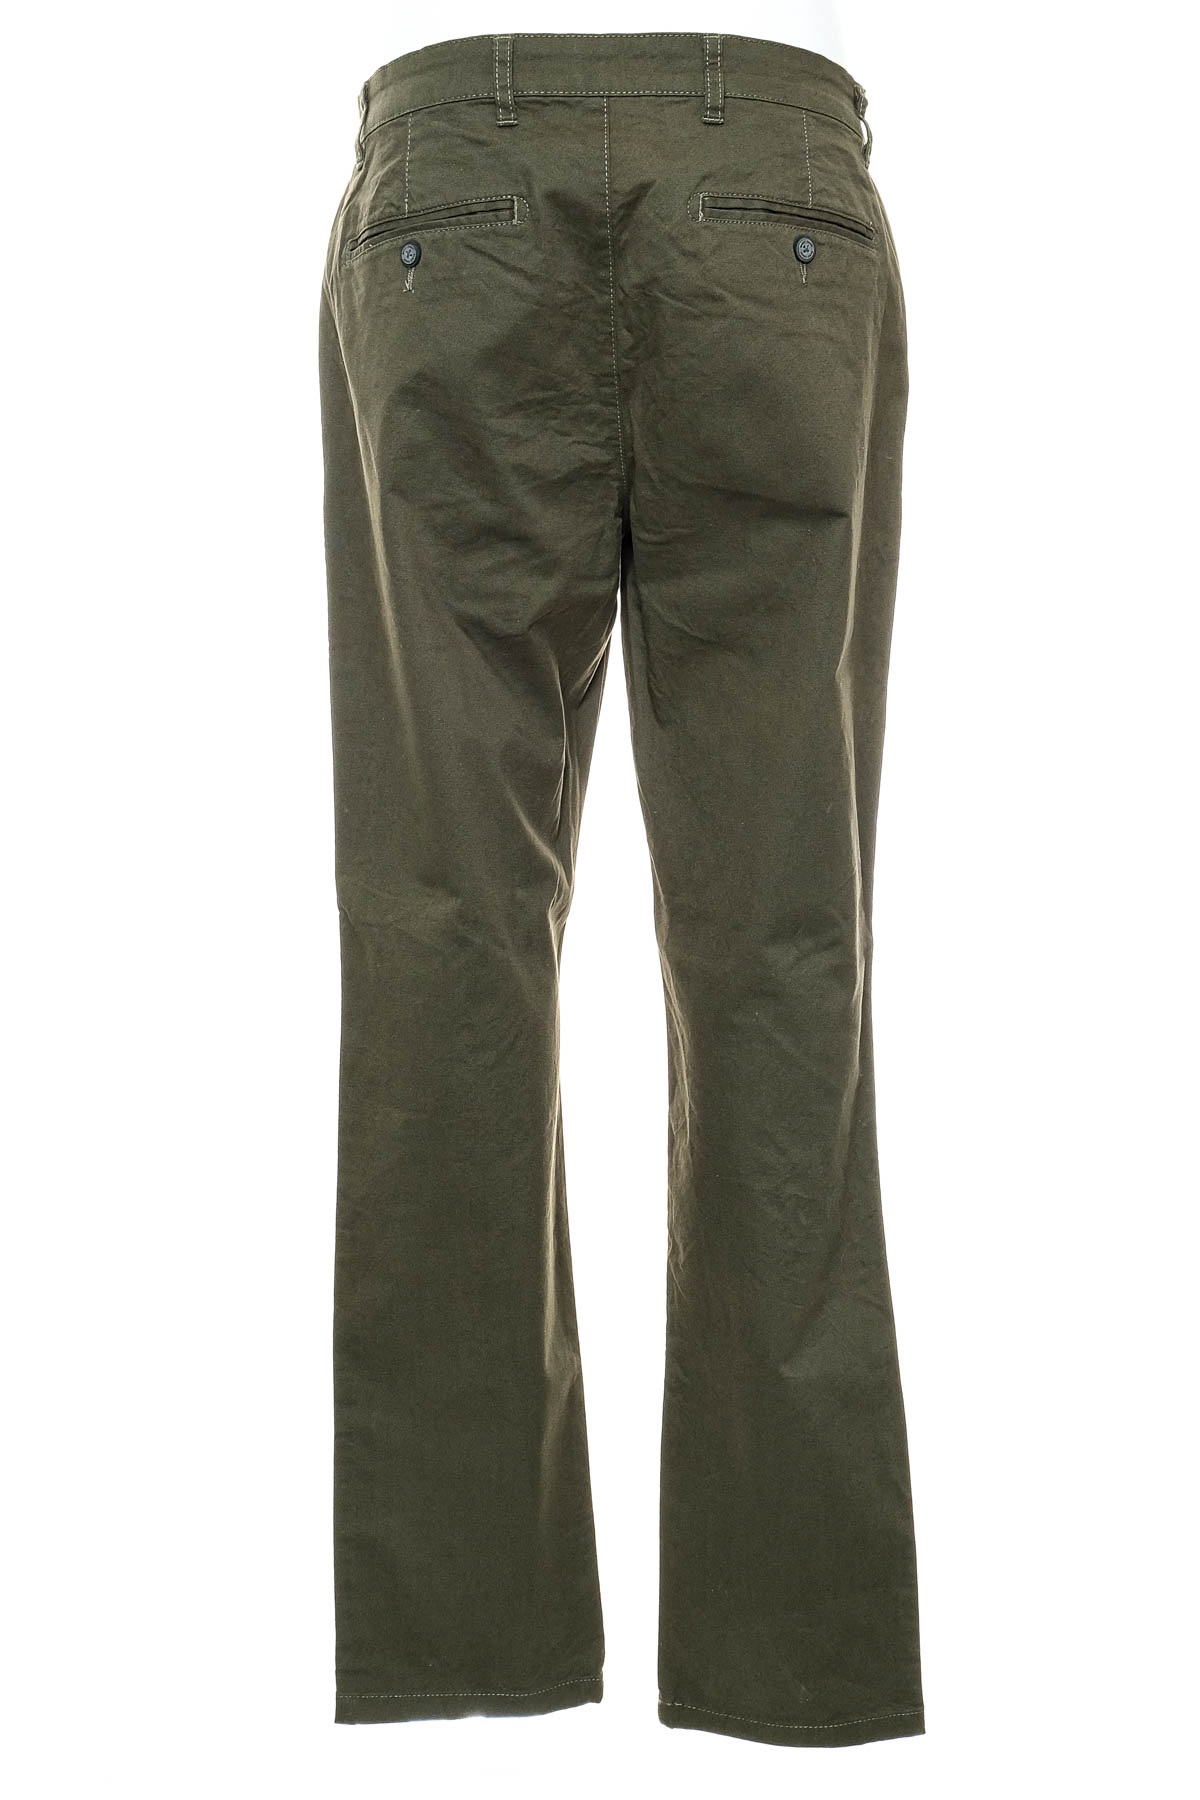 Pantalon pentru bărbați - LC Waikiki BASIC - 1